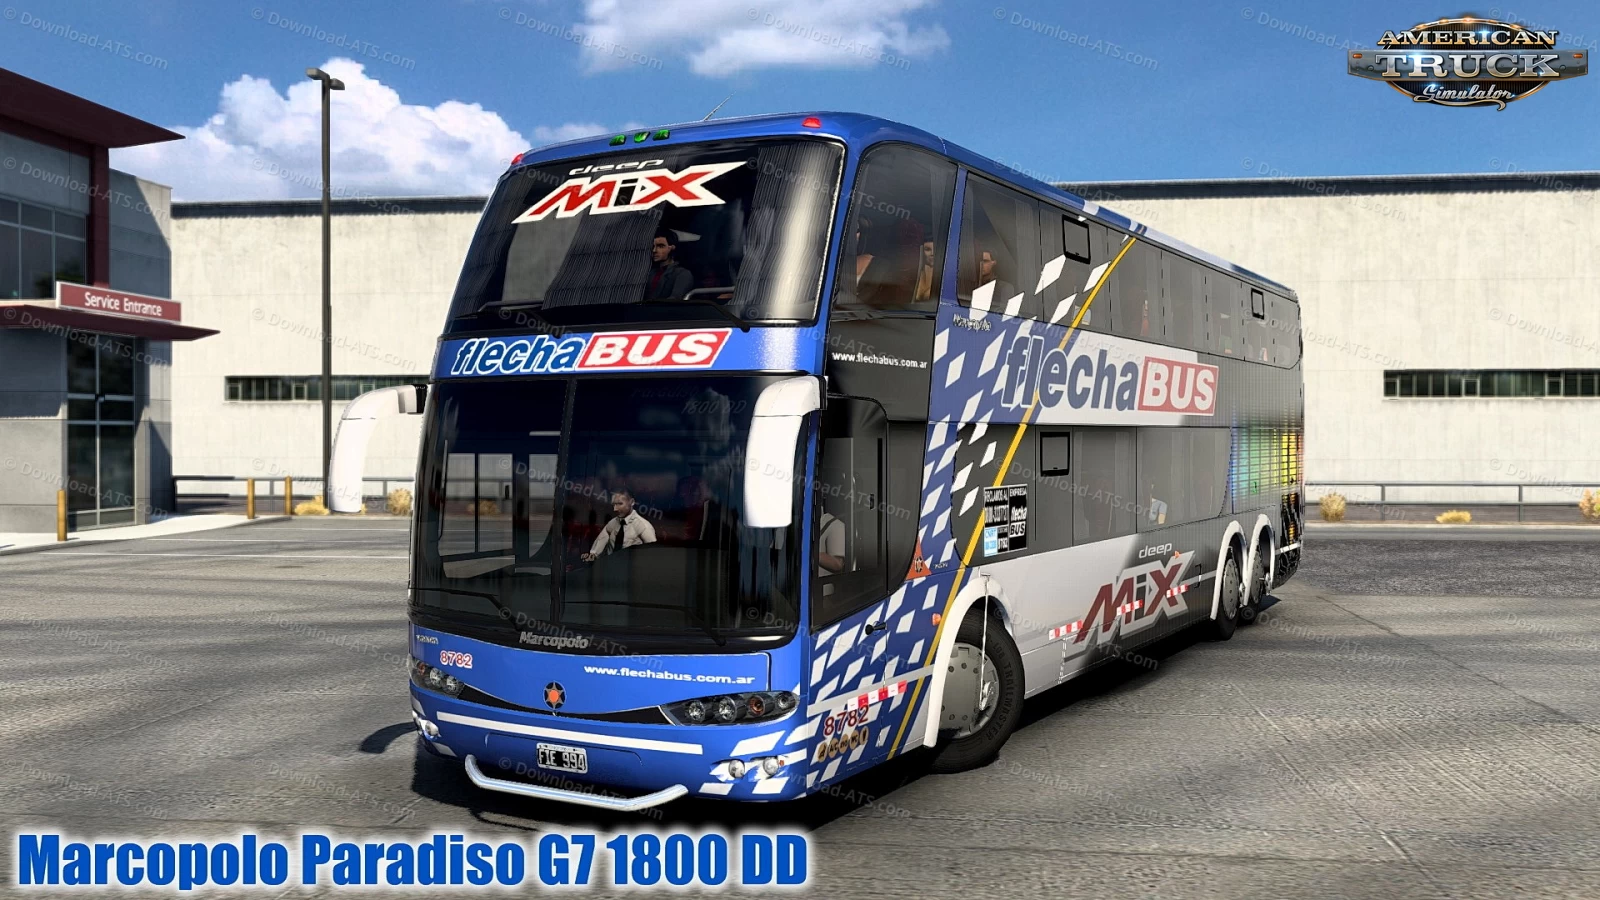 Marcopolo Paradiso G7 1800 DD Bus v1.9 (1.49.x) for ATS